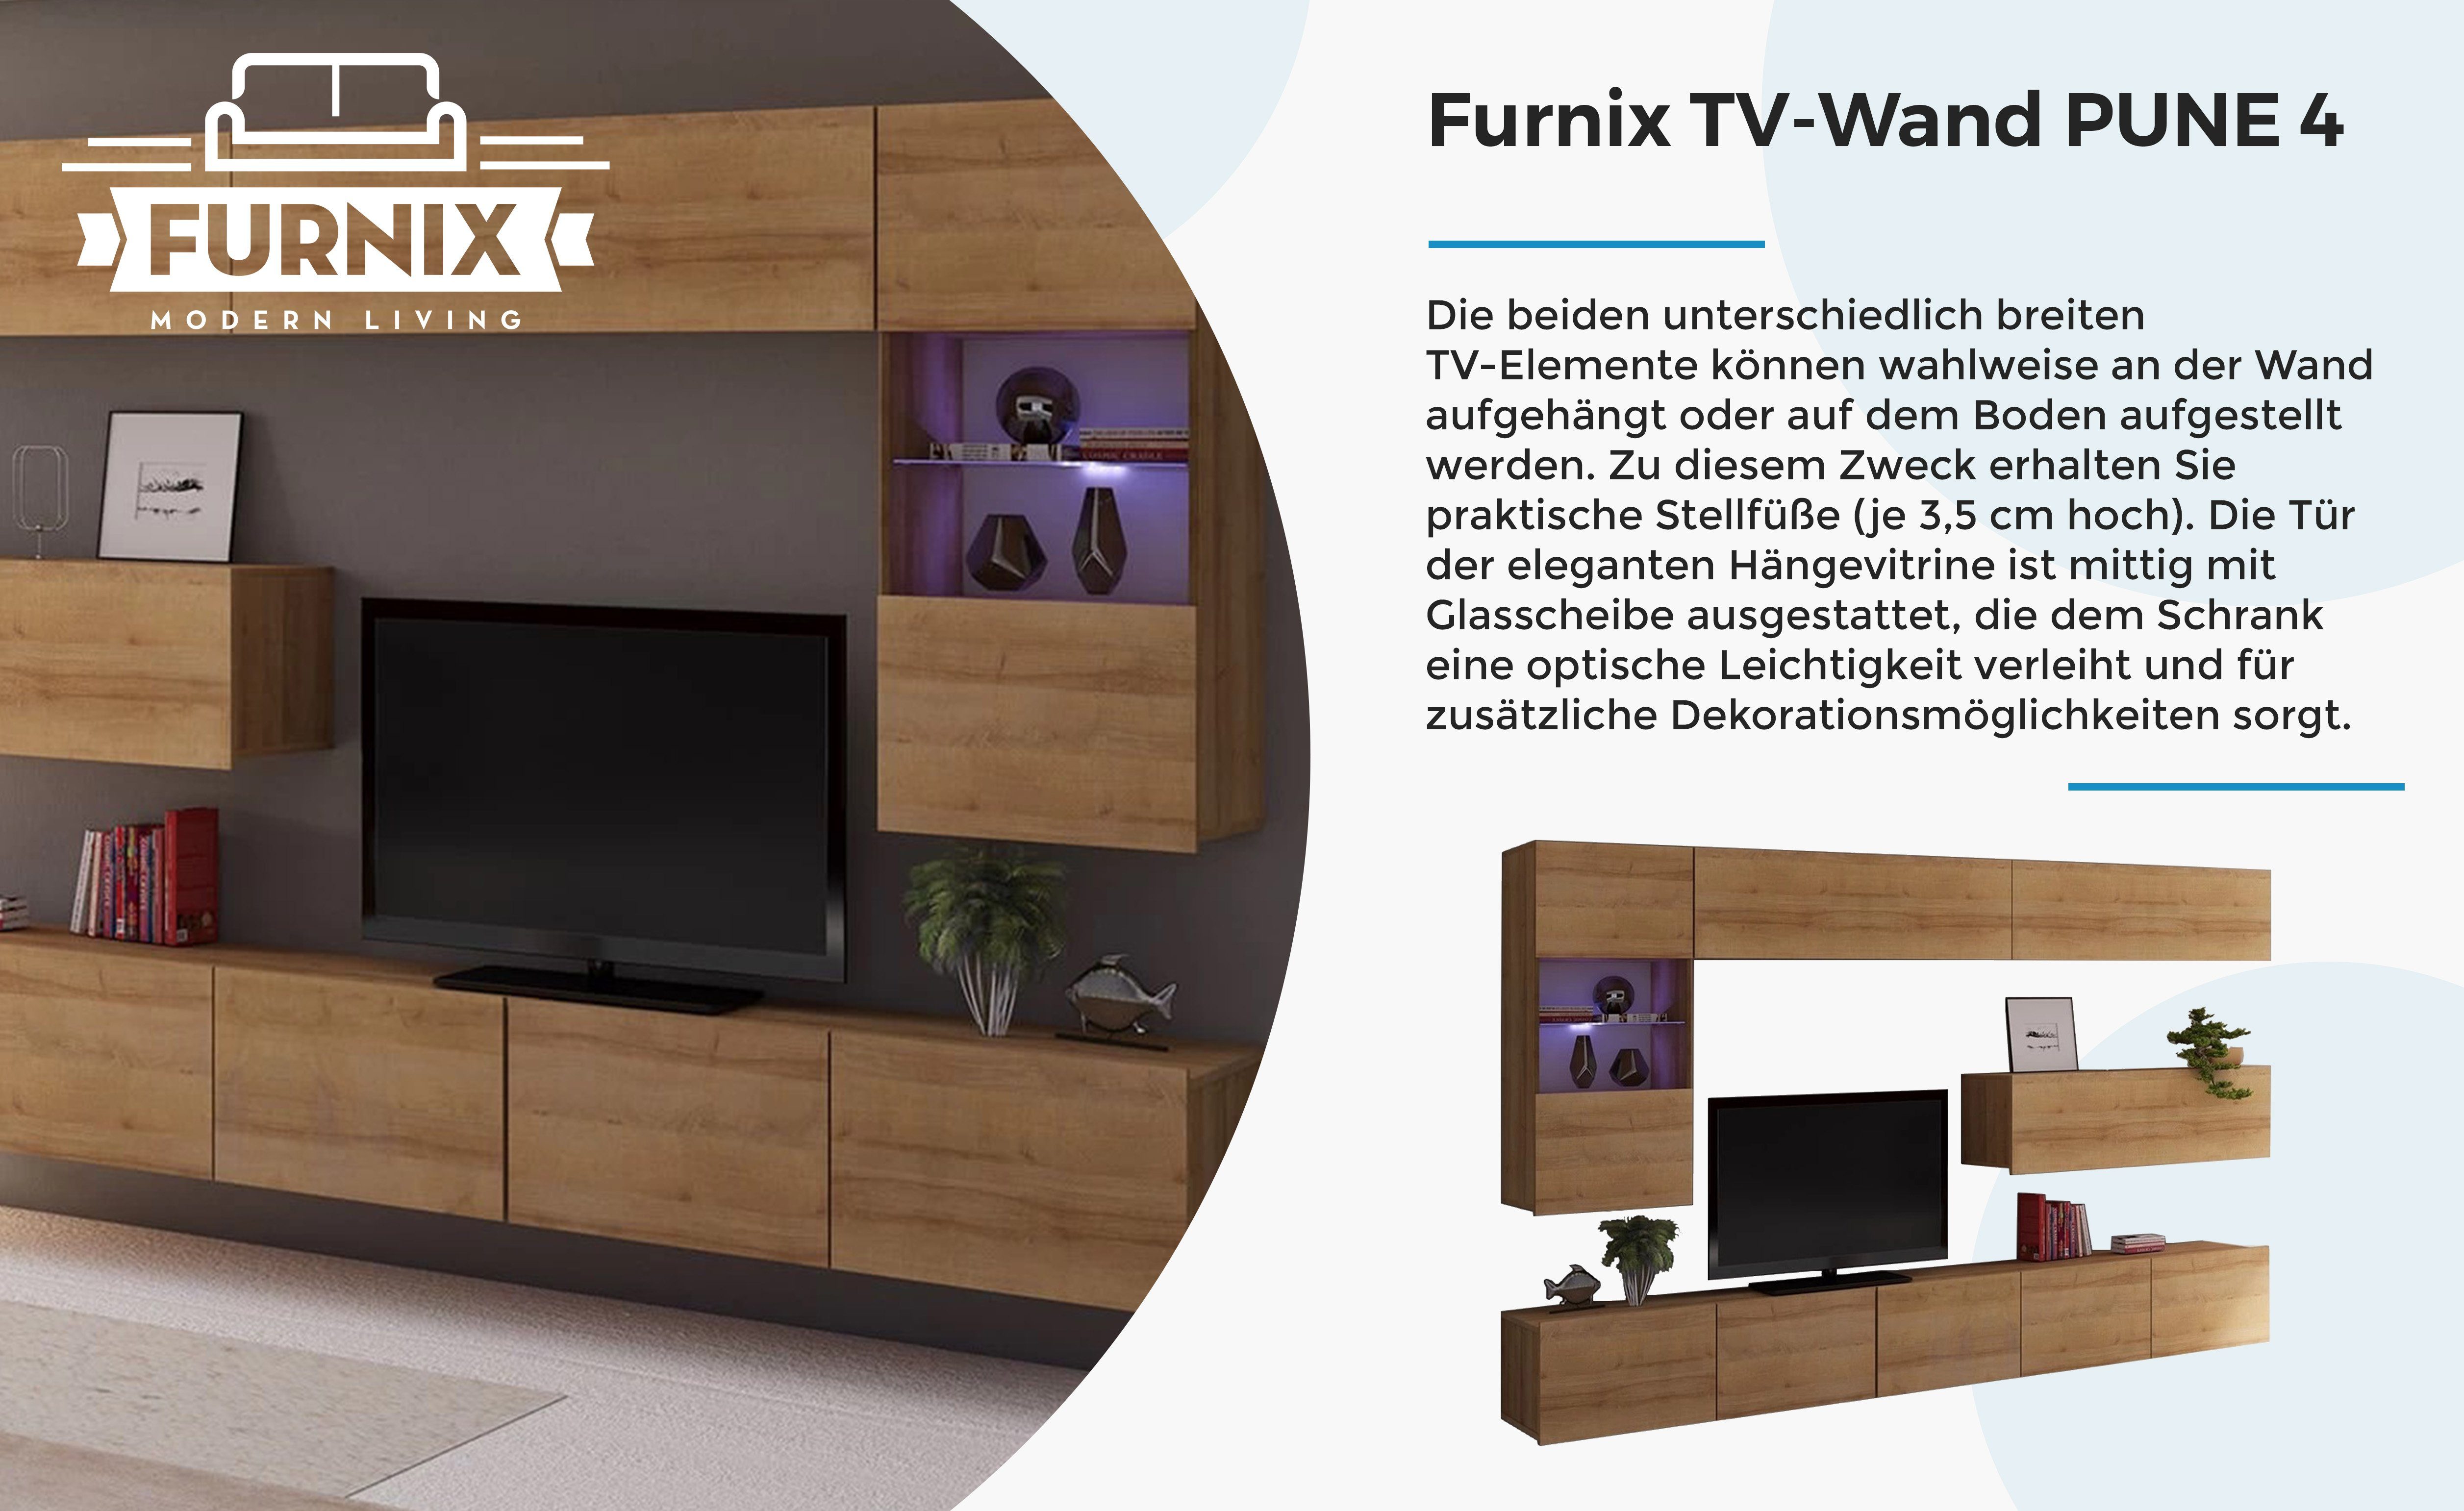 TV-Wand 4 Eiche Furnix Gold m 6 Wohnwand teilig Breite cm, Möbelwand, PUNE 2,55 260017652787 Hochglanz Mediawand, Auswahl,